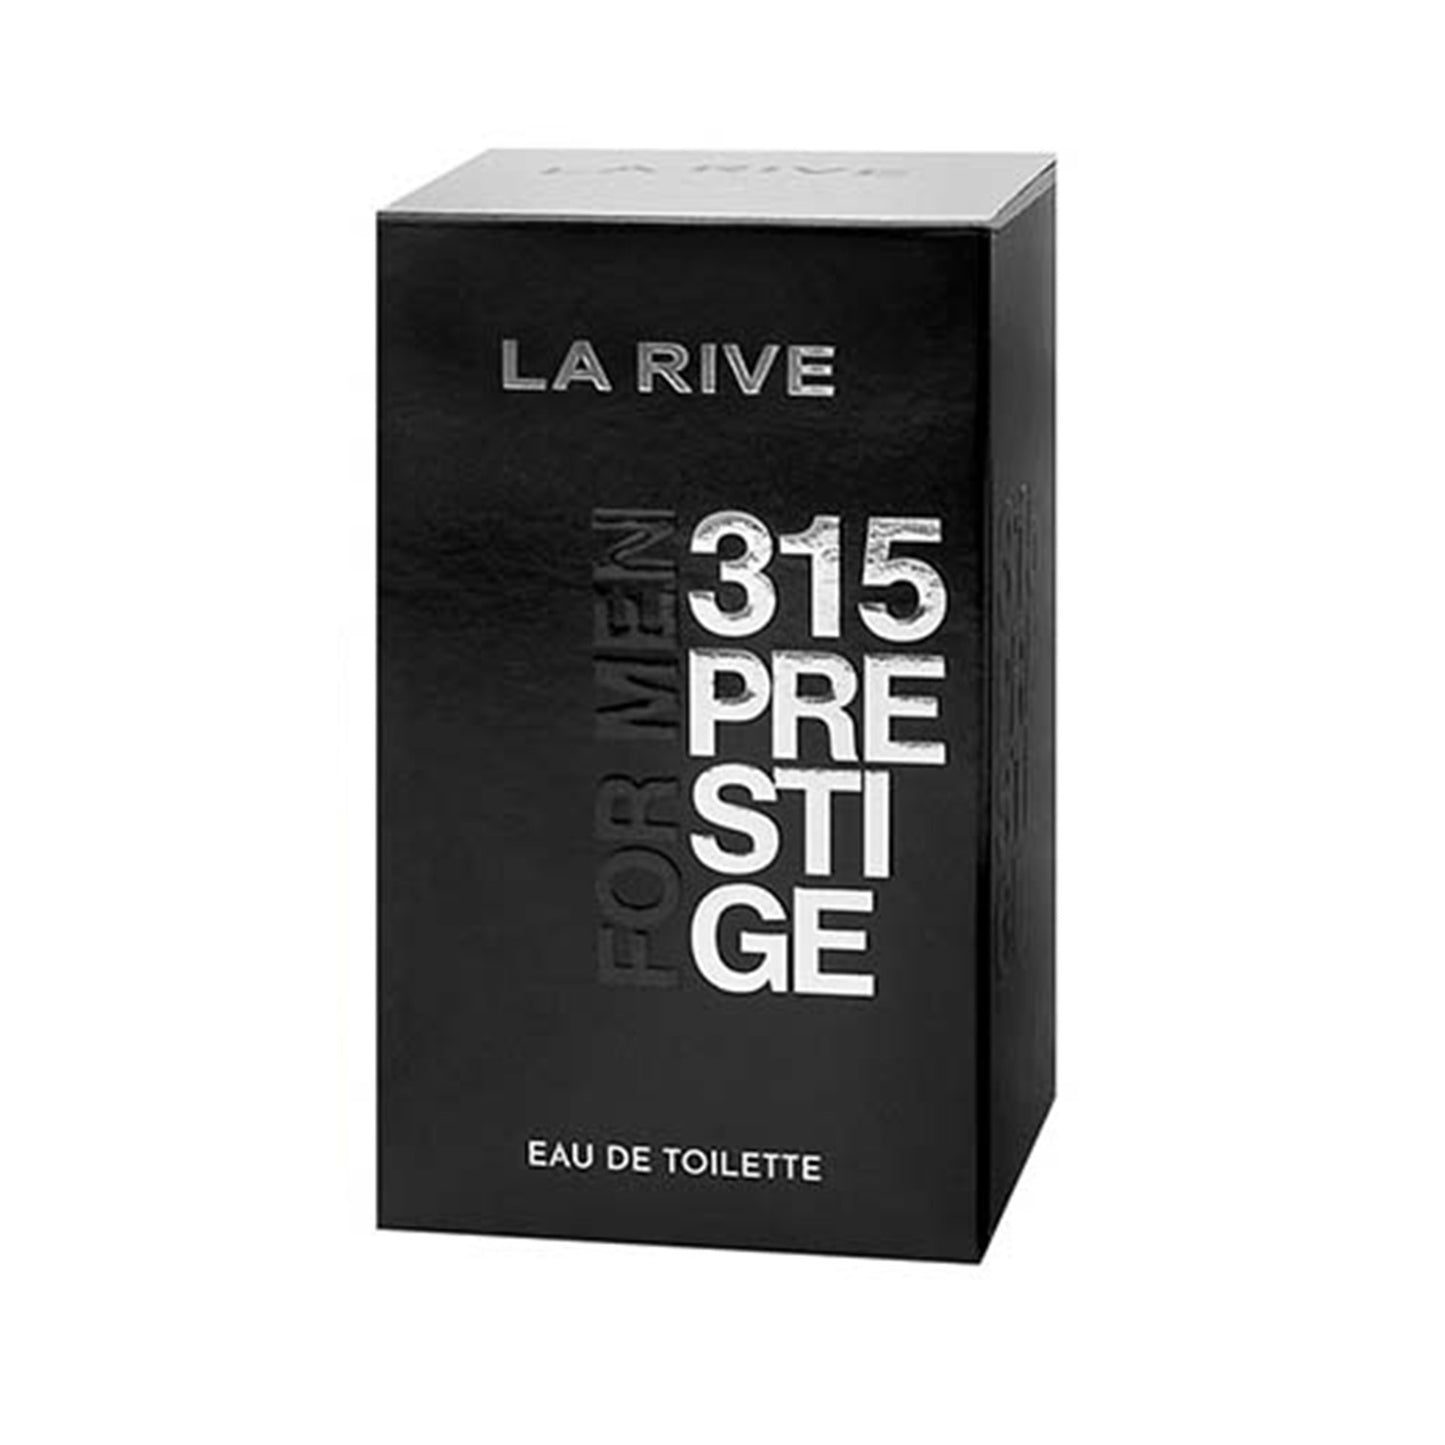 LA RIVE 315 PRESTIGE EAU DE TOILETTE 100ML - aromatic